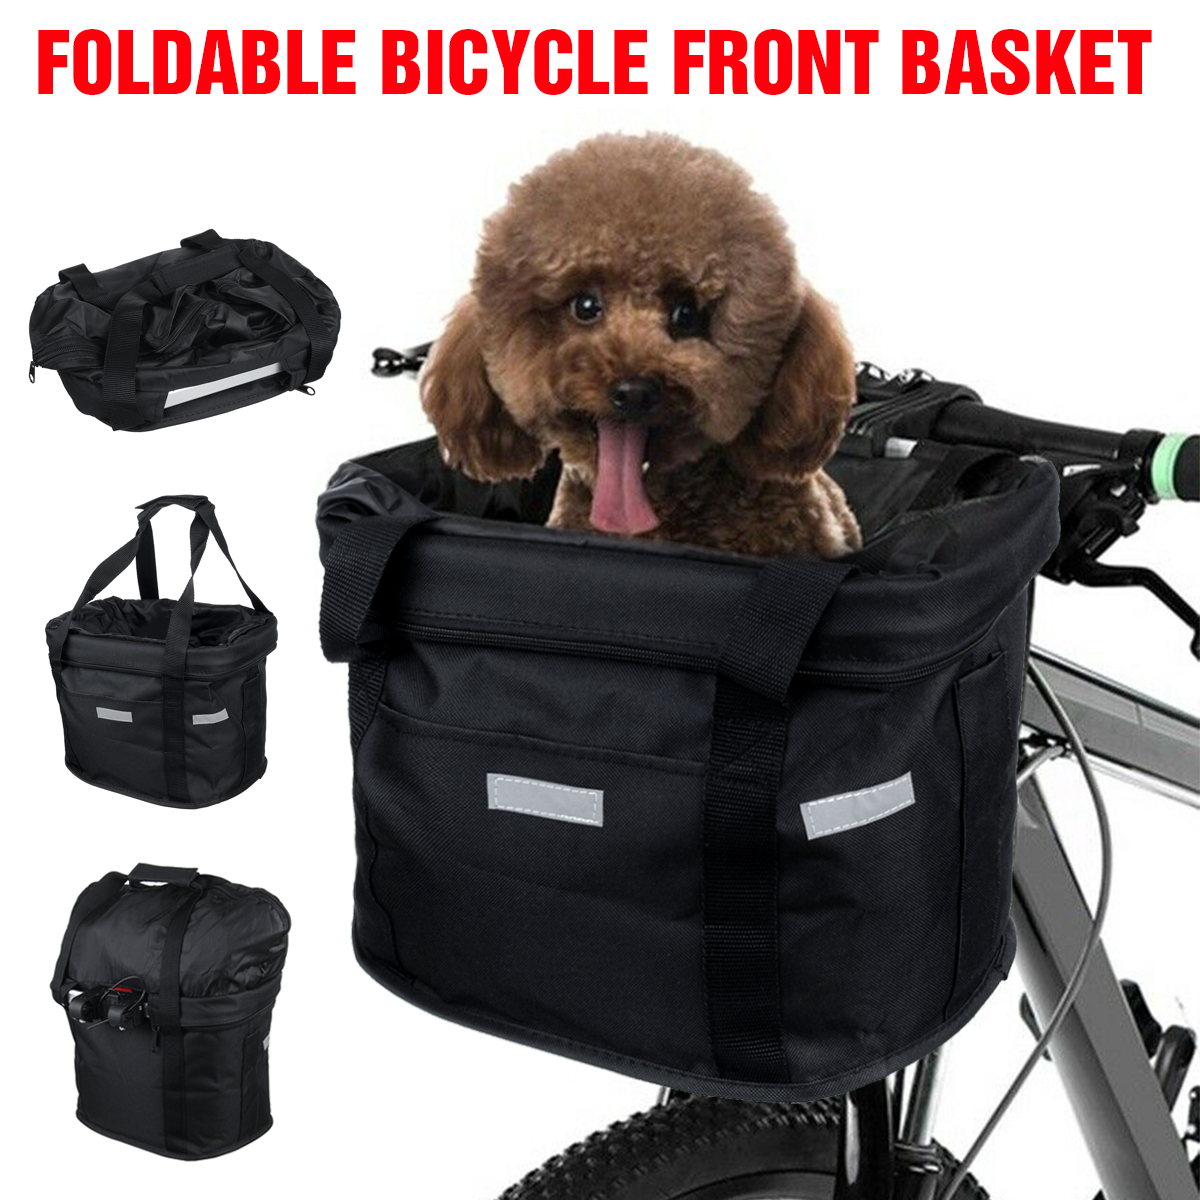 Bicycle Basket Folding Bike Front Handlebar Pet Carrier Frame Bag Shopping Bag 